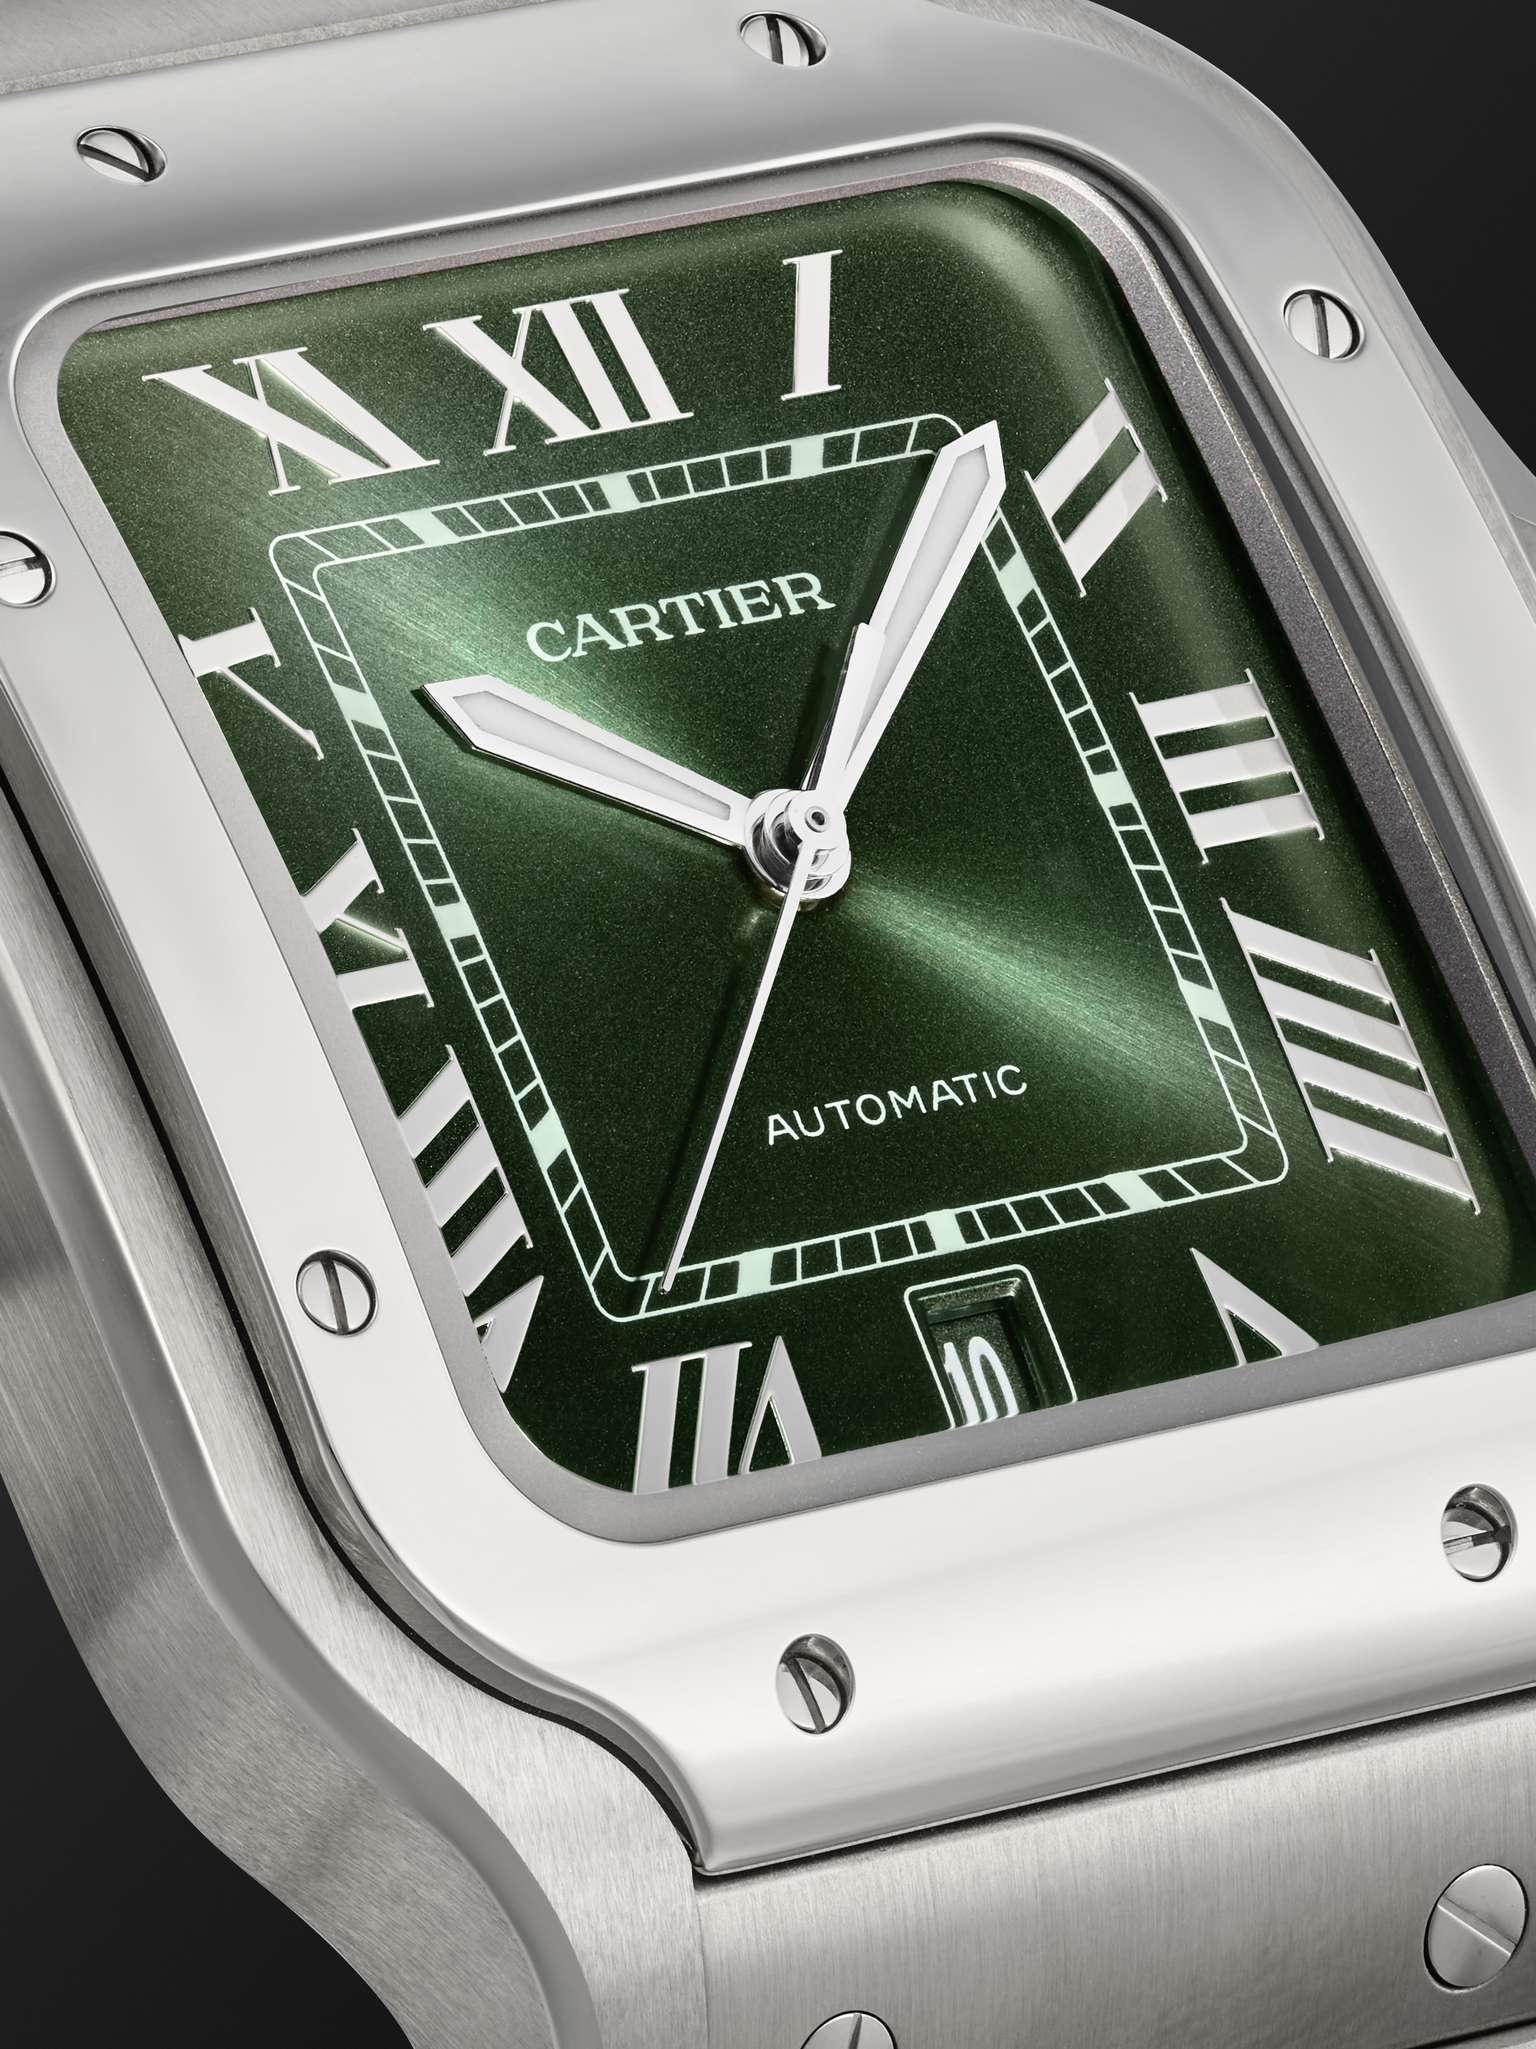 Santos de Cartier Automatic 39.8mm Interchangeable Stainless Steel and Alligator Watch, Ref. No. CRW - 5